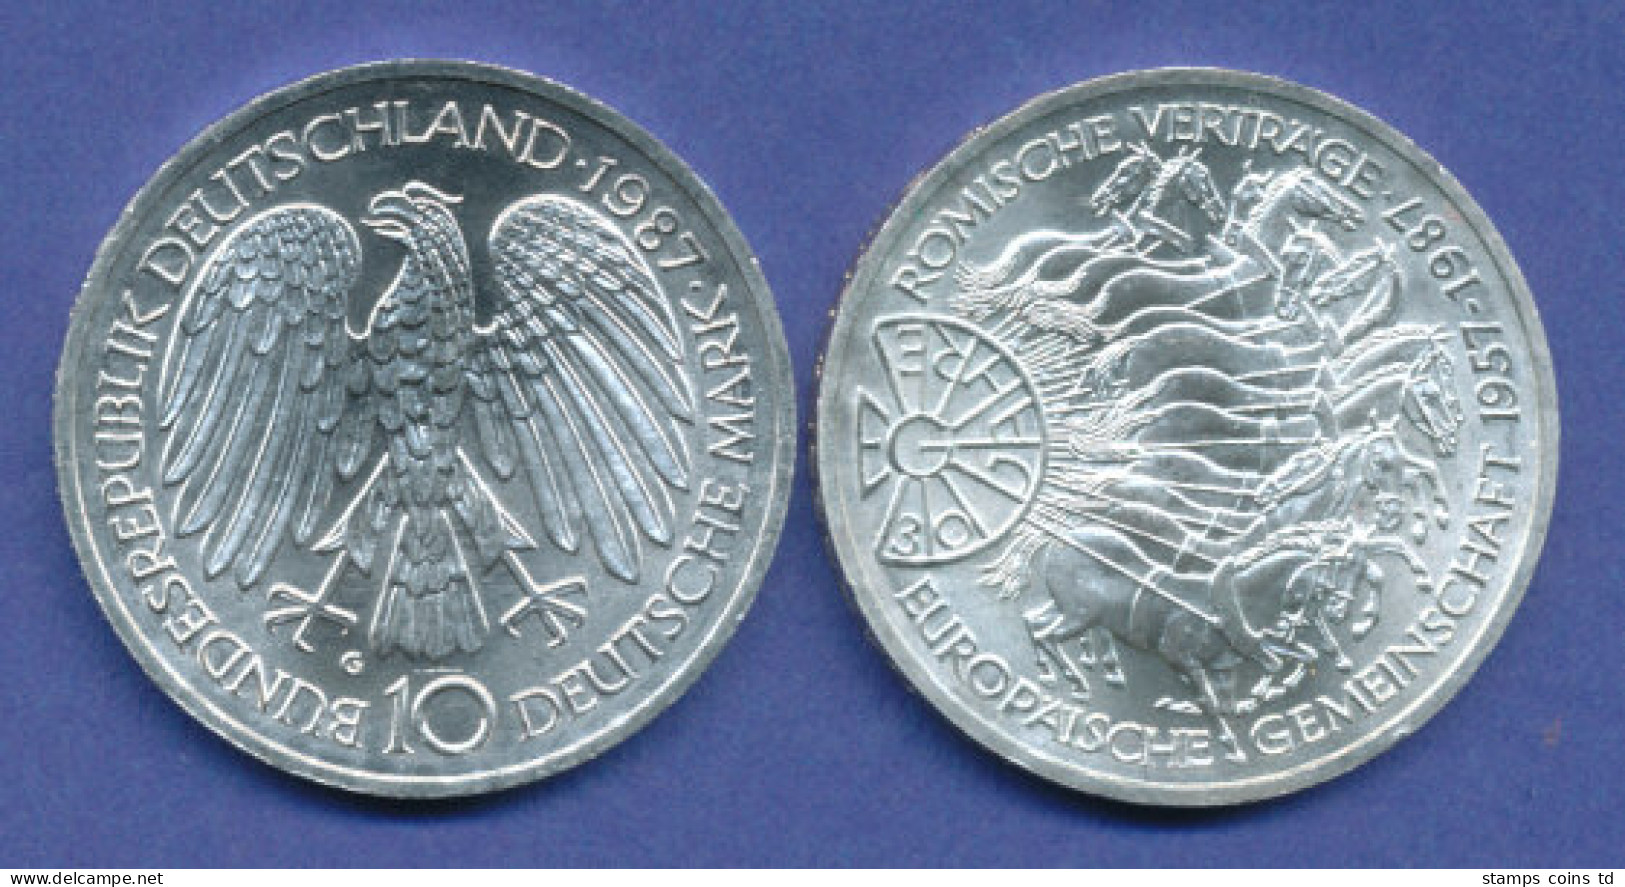 Bundesrepublik 10DM Silber-Gedenkmünze 1987, 30 Jahre EG - 10 Marcos